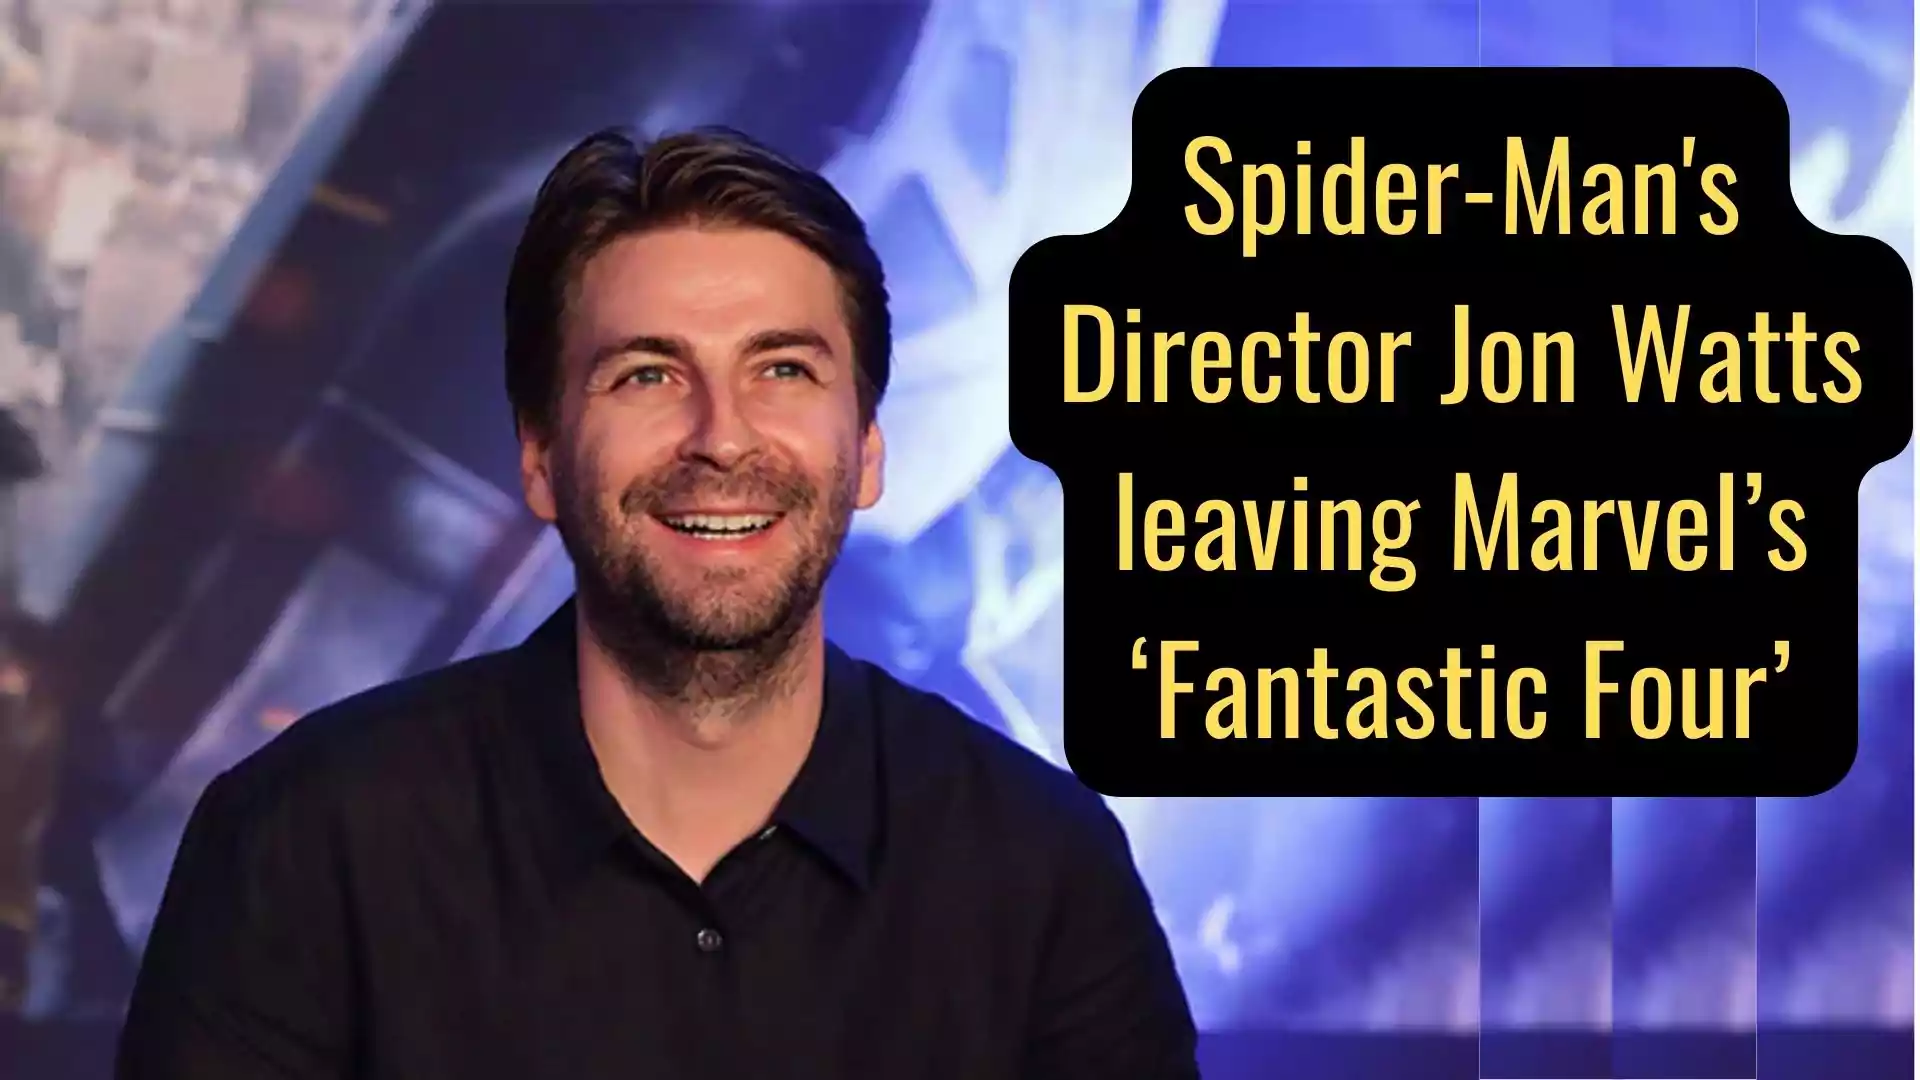 Spider-Man's Director Jon Watts leaving Marvel’s ‘Fantastic Four’